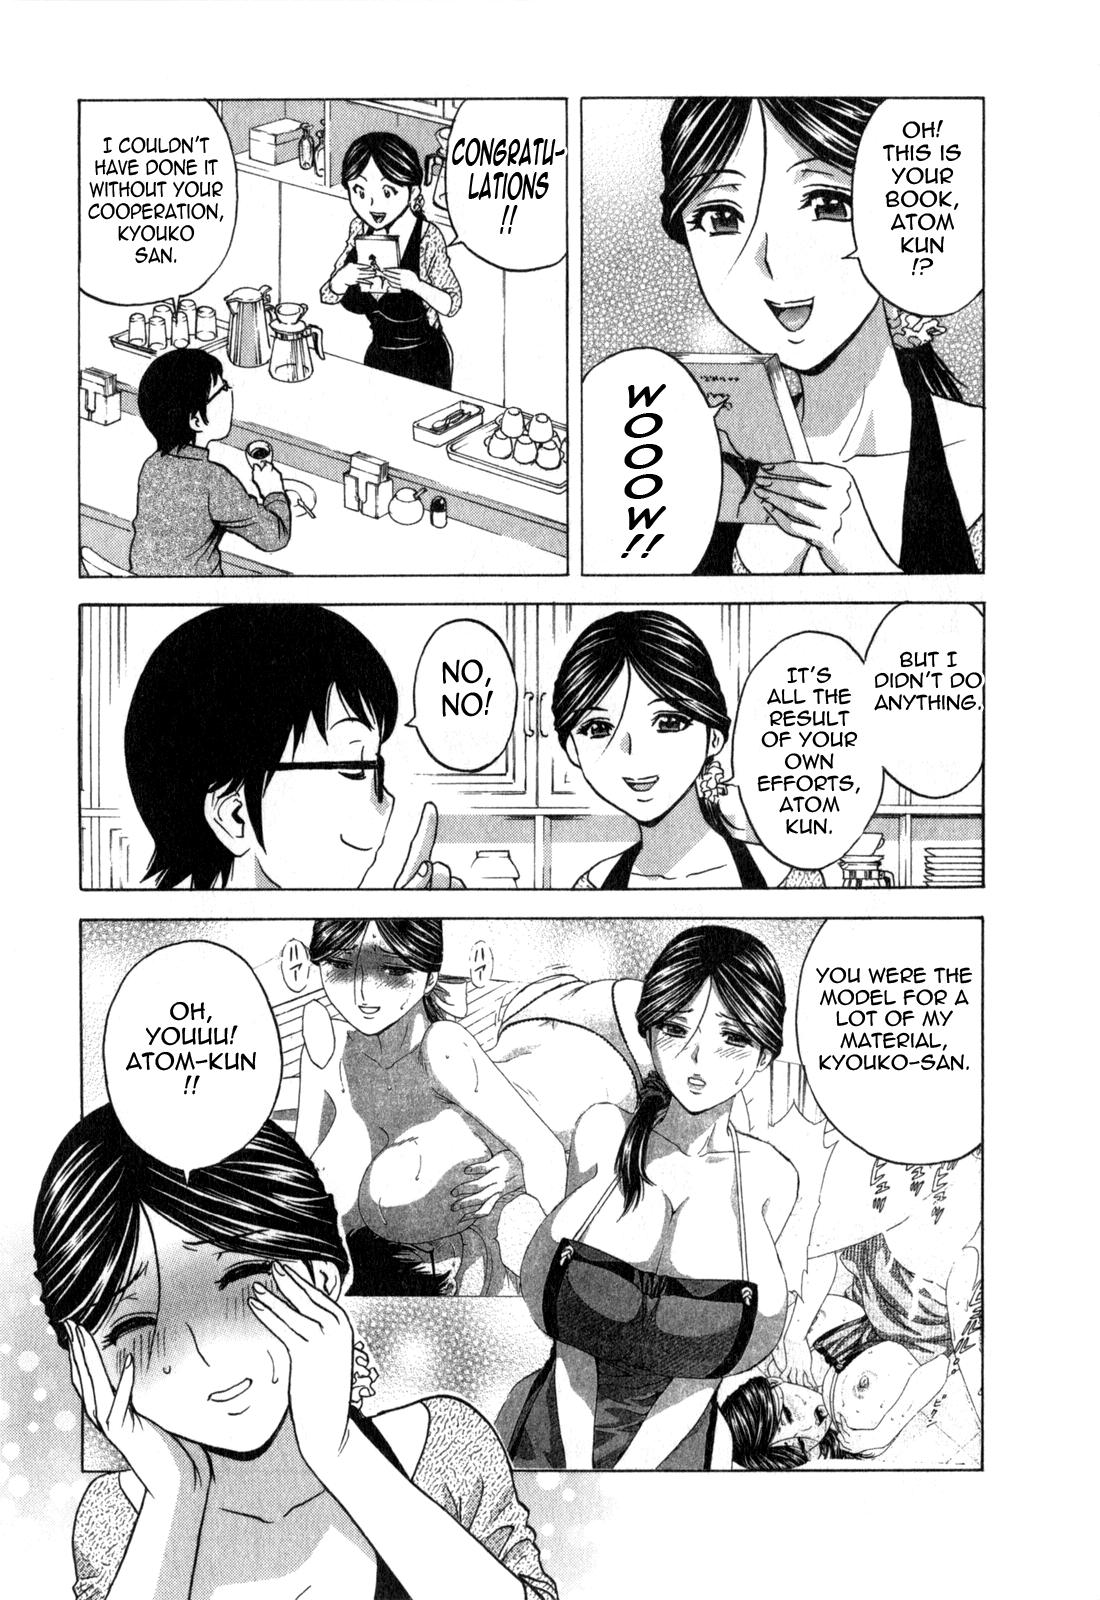 [Hidemaru] Life with Married Women Just Like a Manga 3 - Ch. 1-6 [English] {Tadanohito} 14